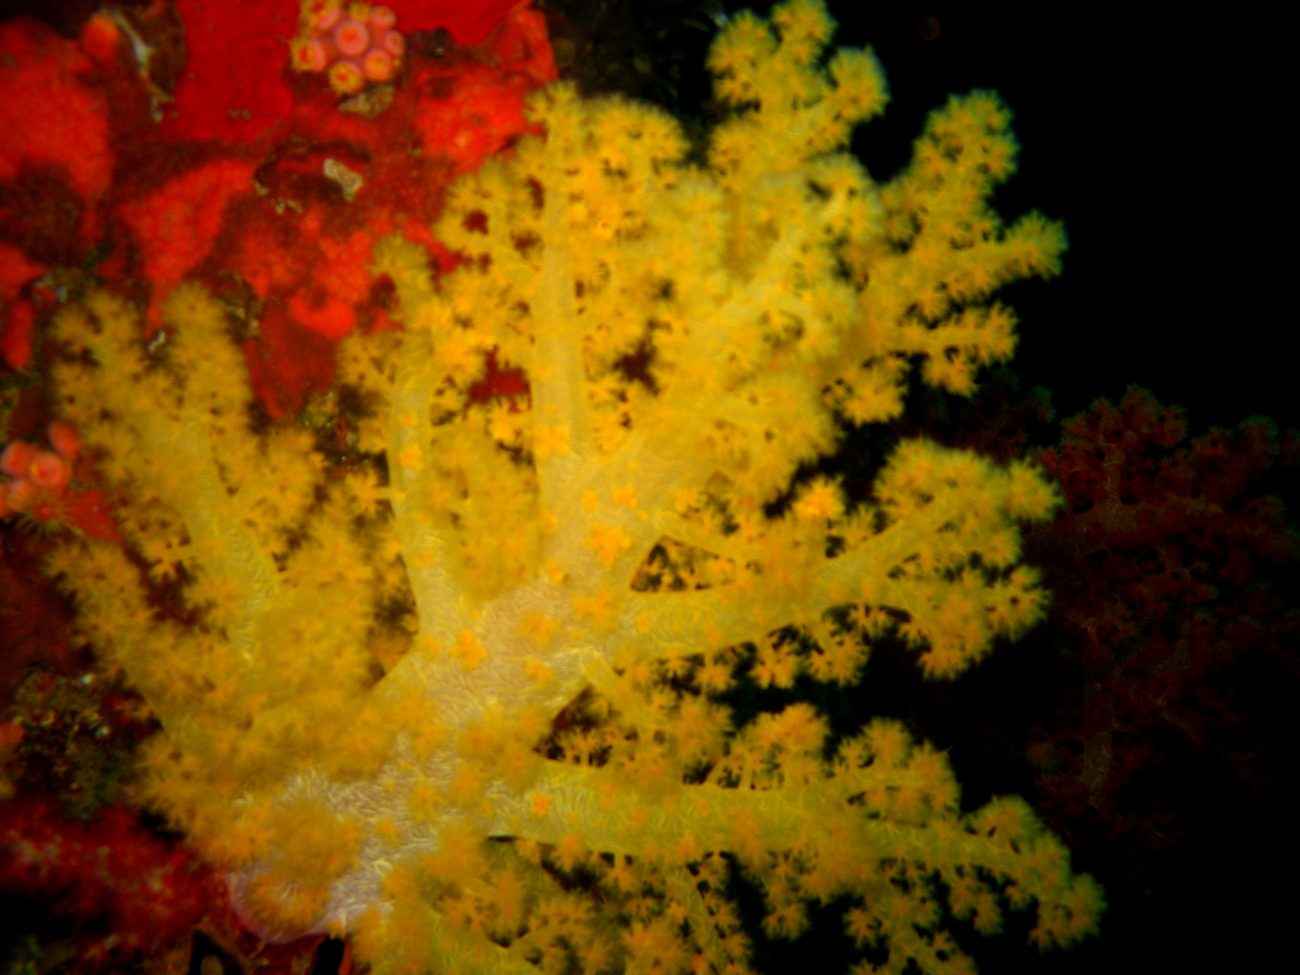 Soft corals (Dendronephthya sp